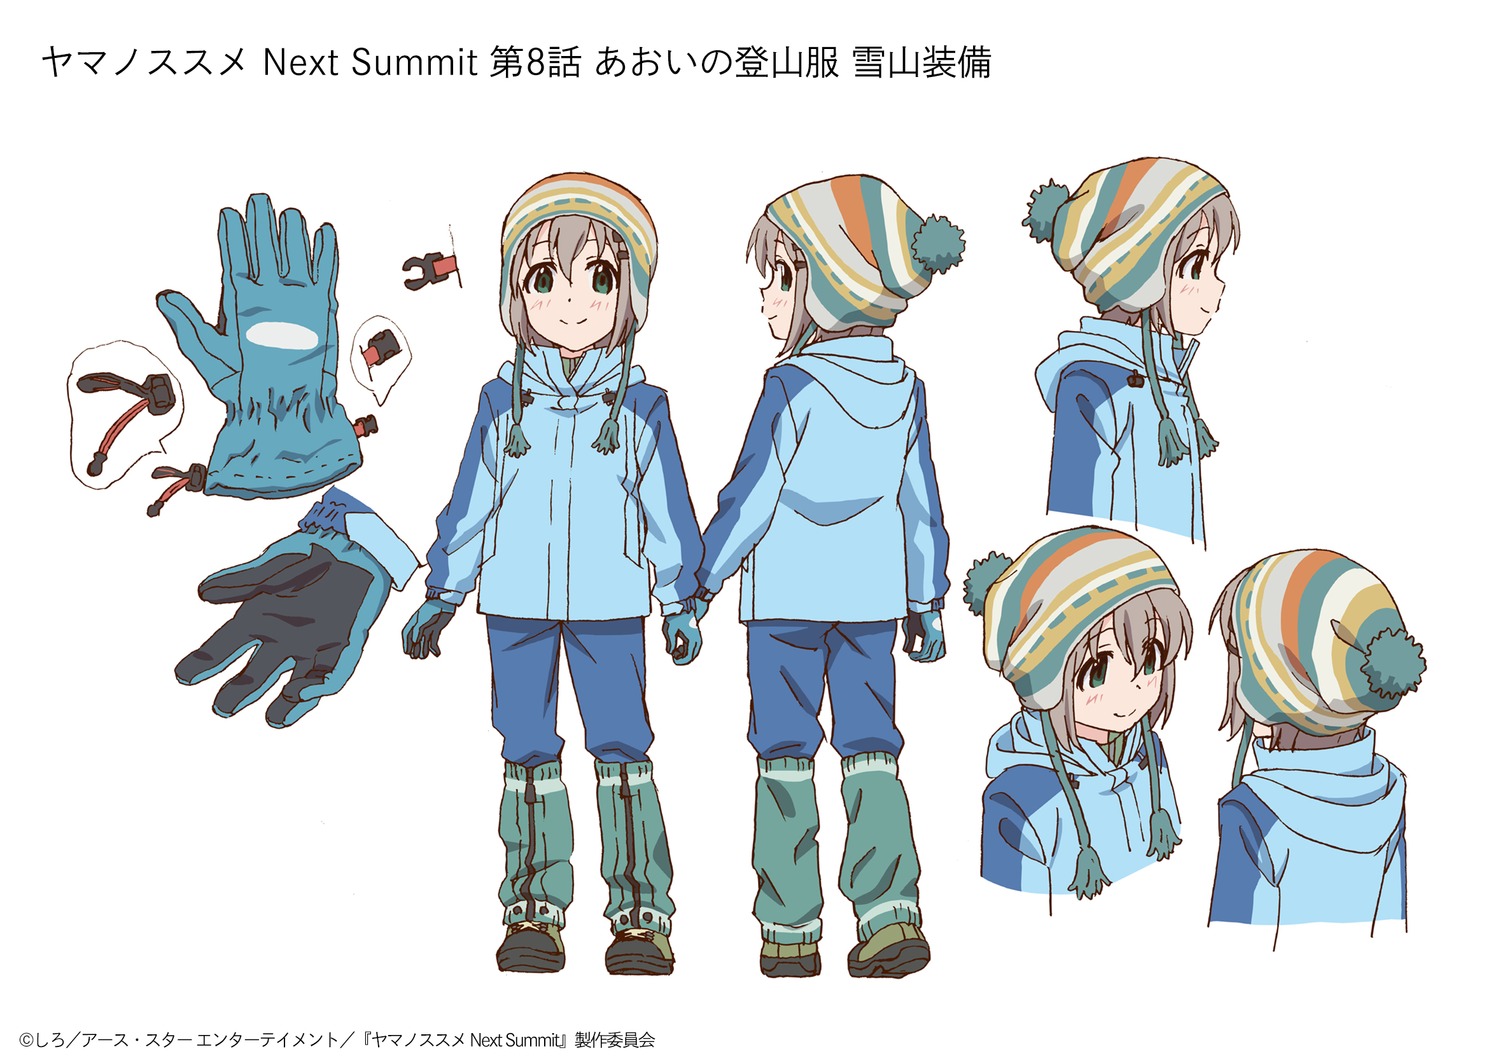 atsushi_irie character_design production_materials settei yama_no_susume:_next_summit yama_no_susume_series